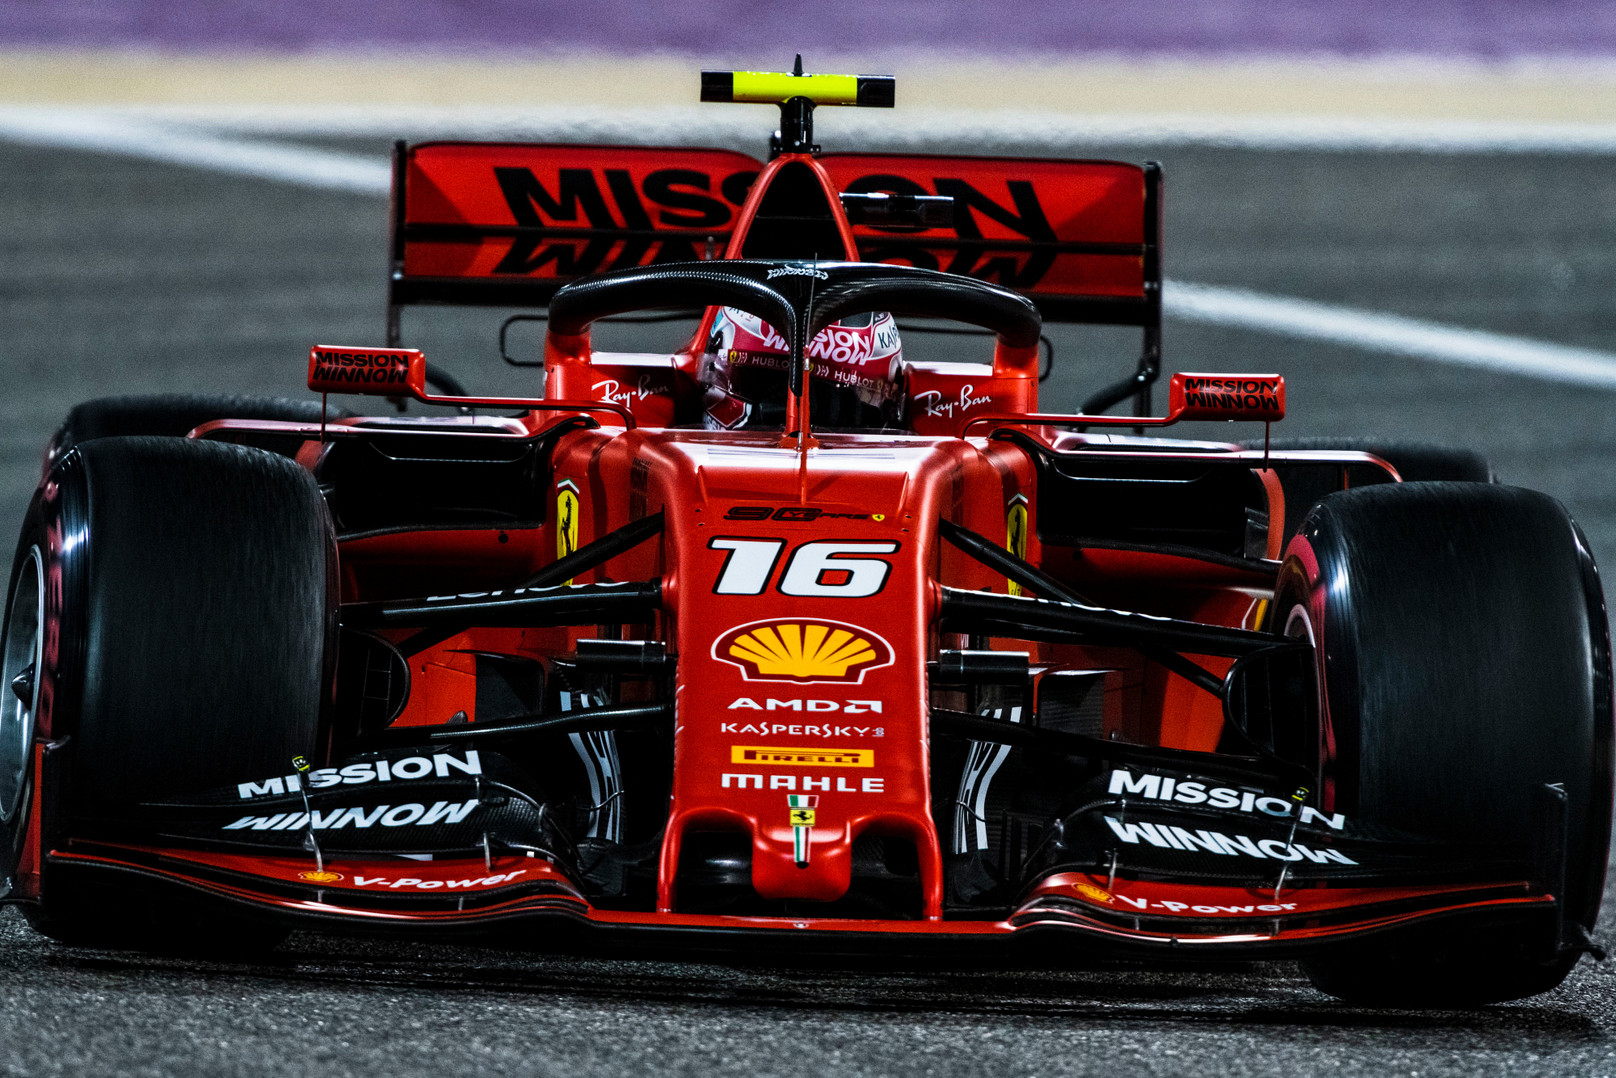 Bahreine pirmąją „pole“ karjeroje iškovojo C. Leclercas